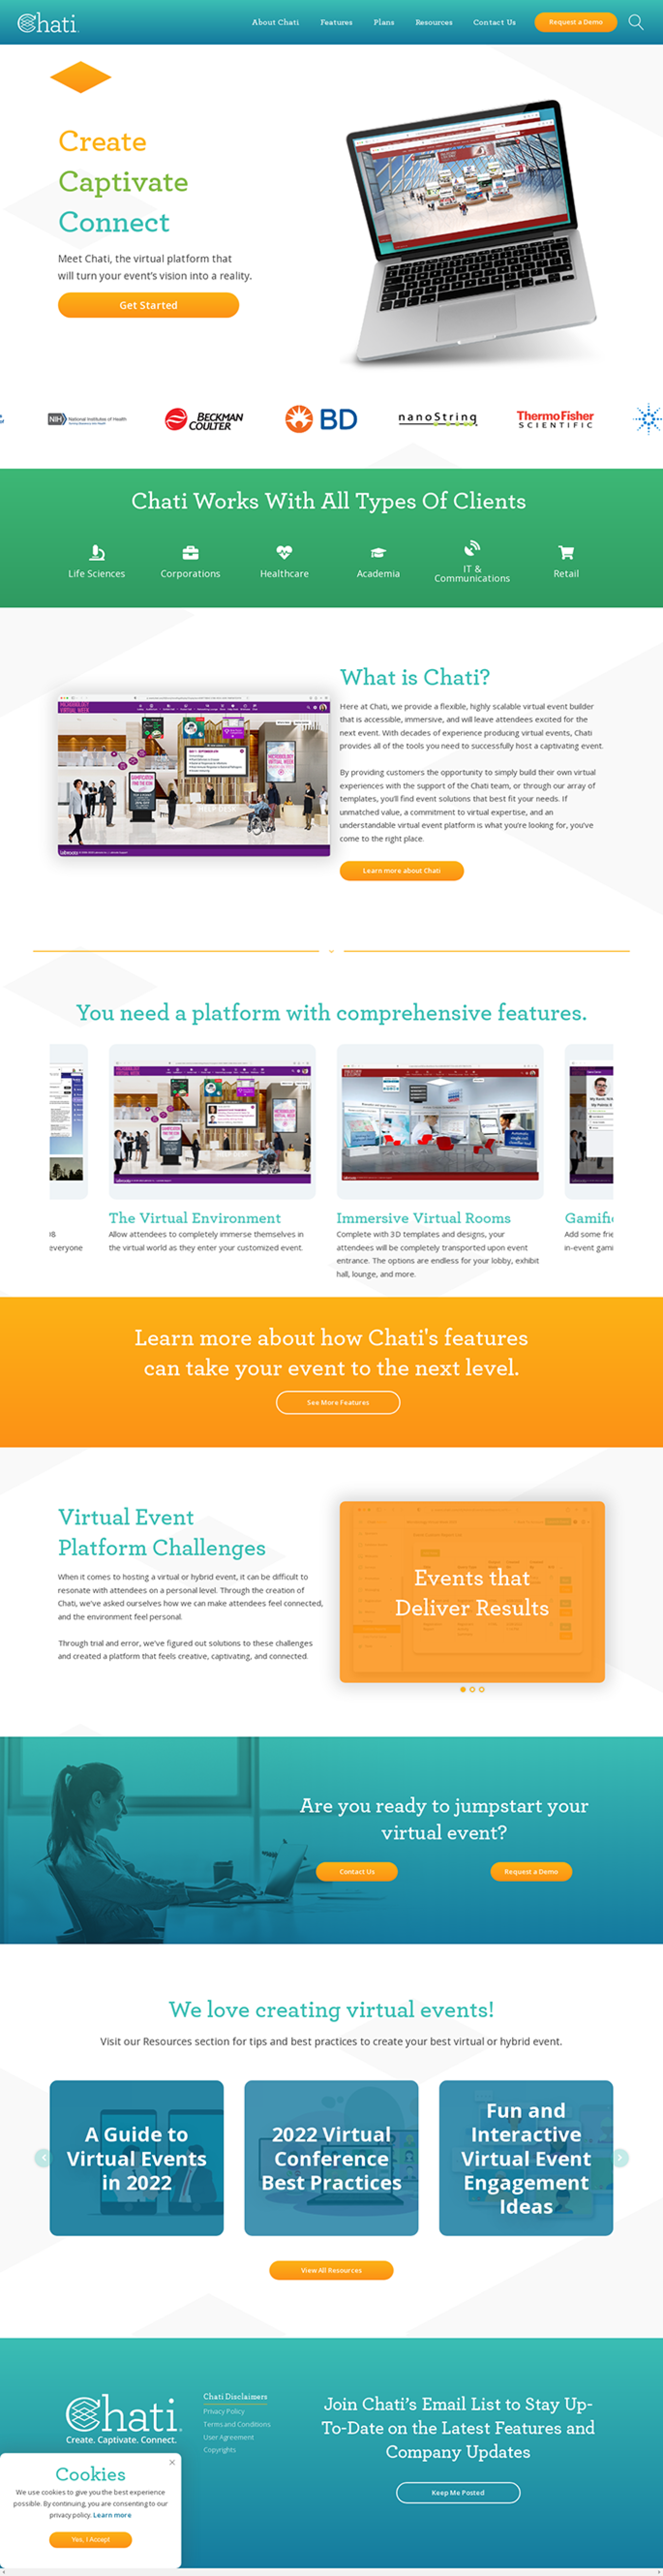 Website design for virtual event platform.